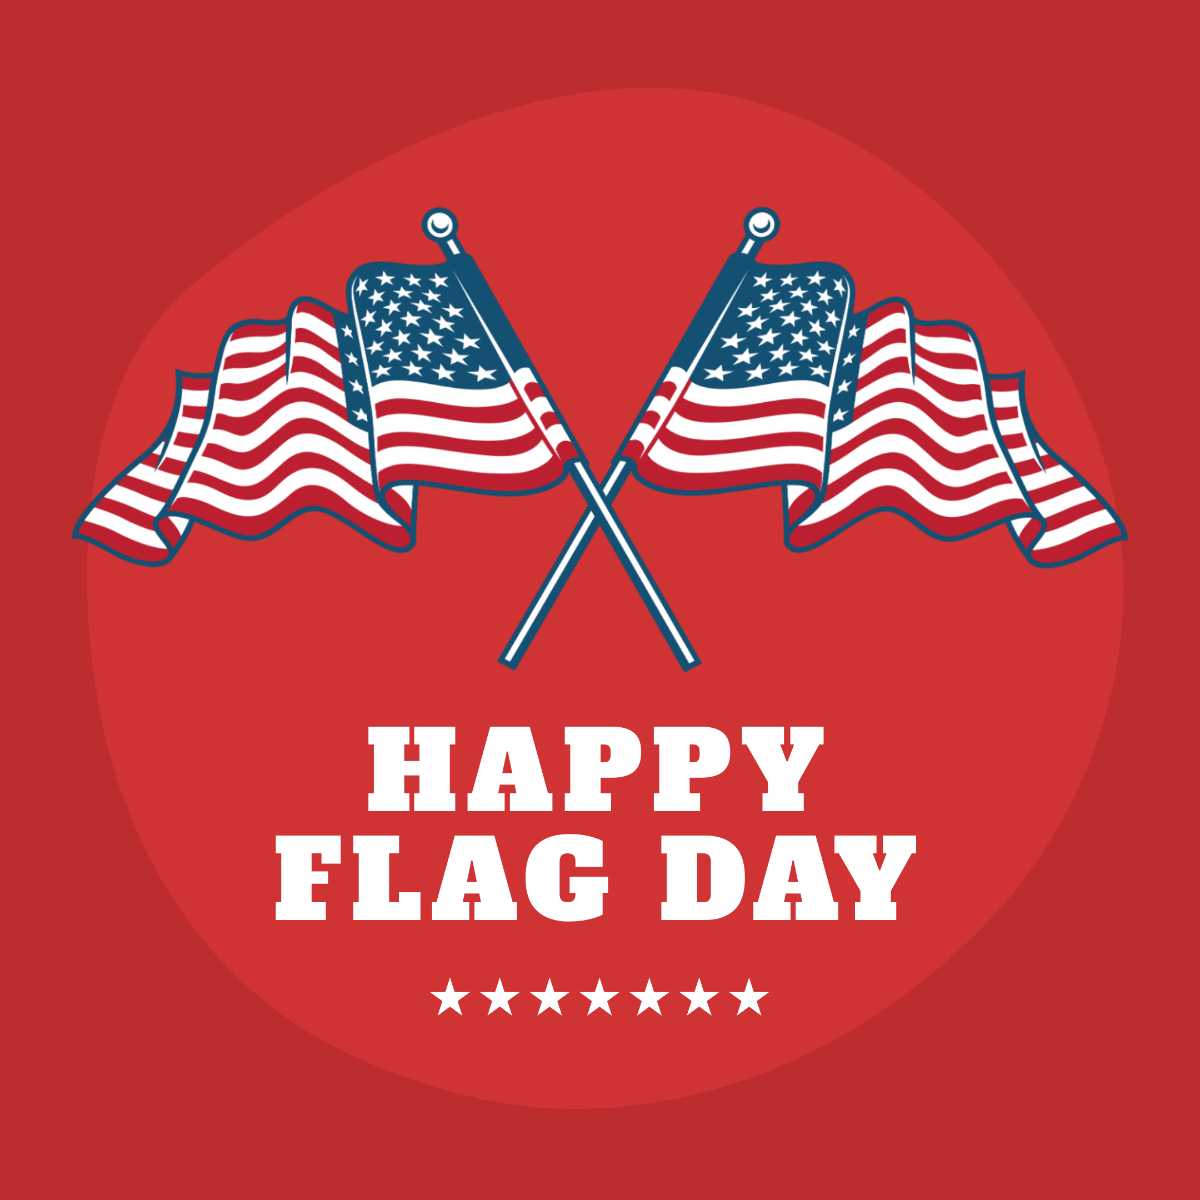 Free Cartoon Happy Flag Day Template